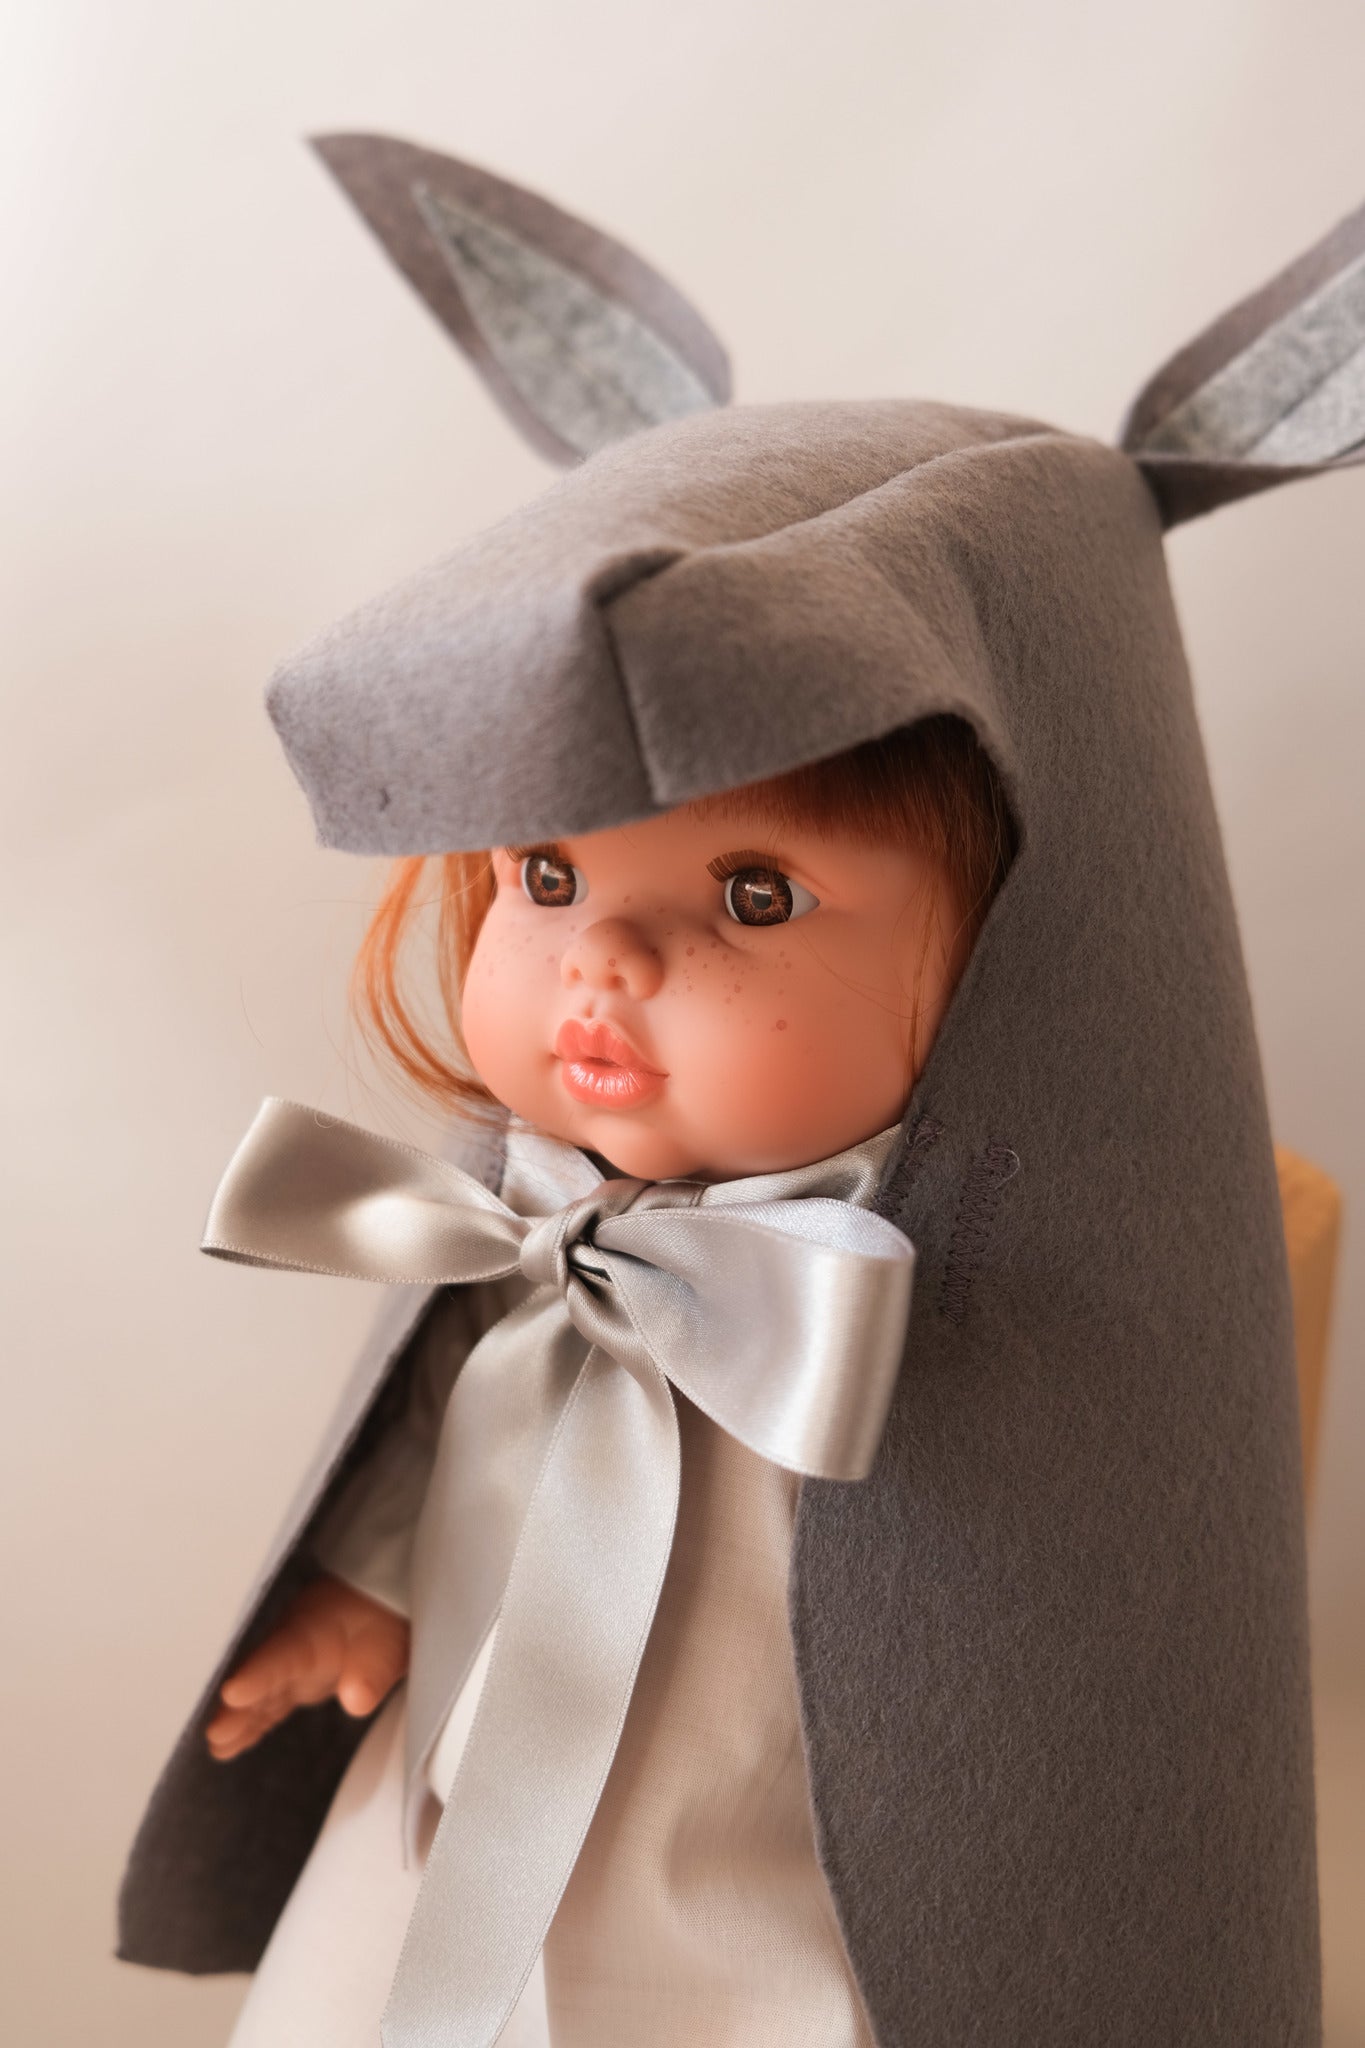 Donkey Doll Costume